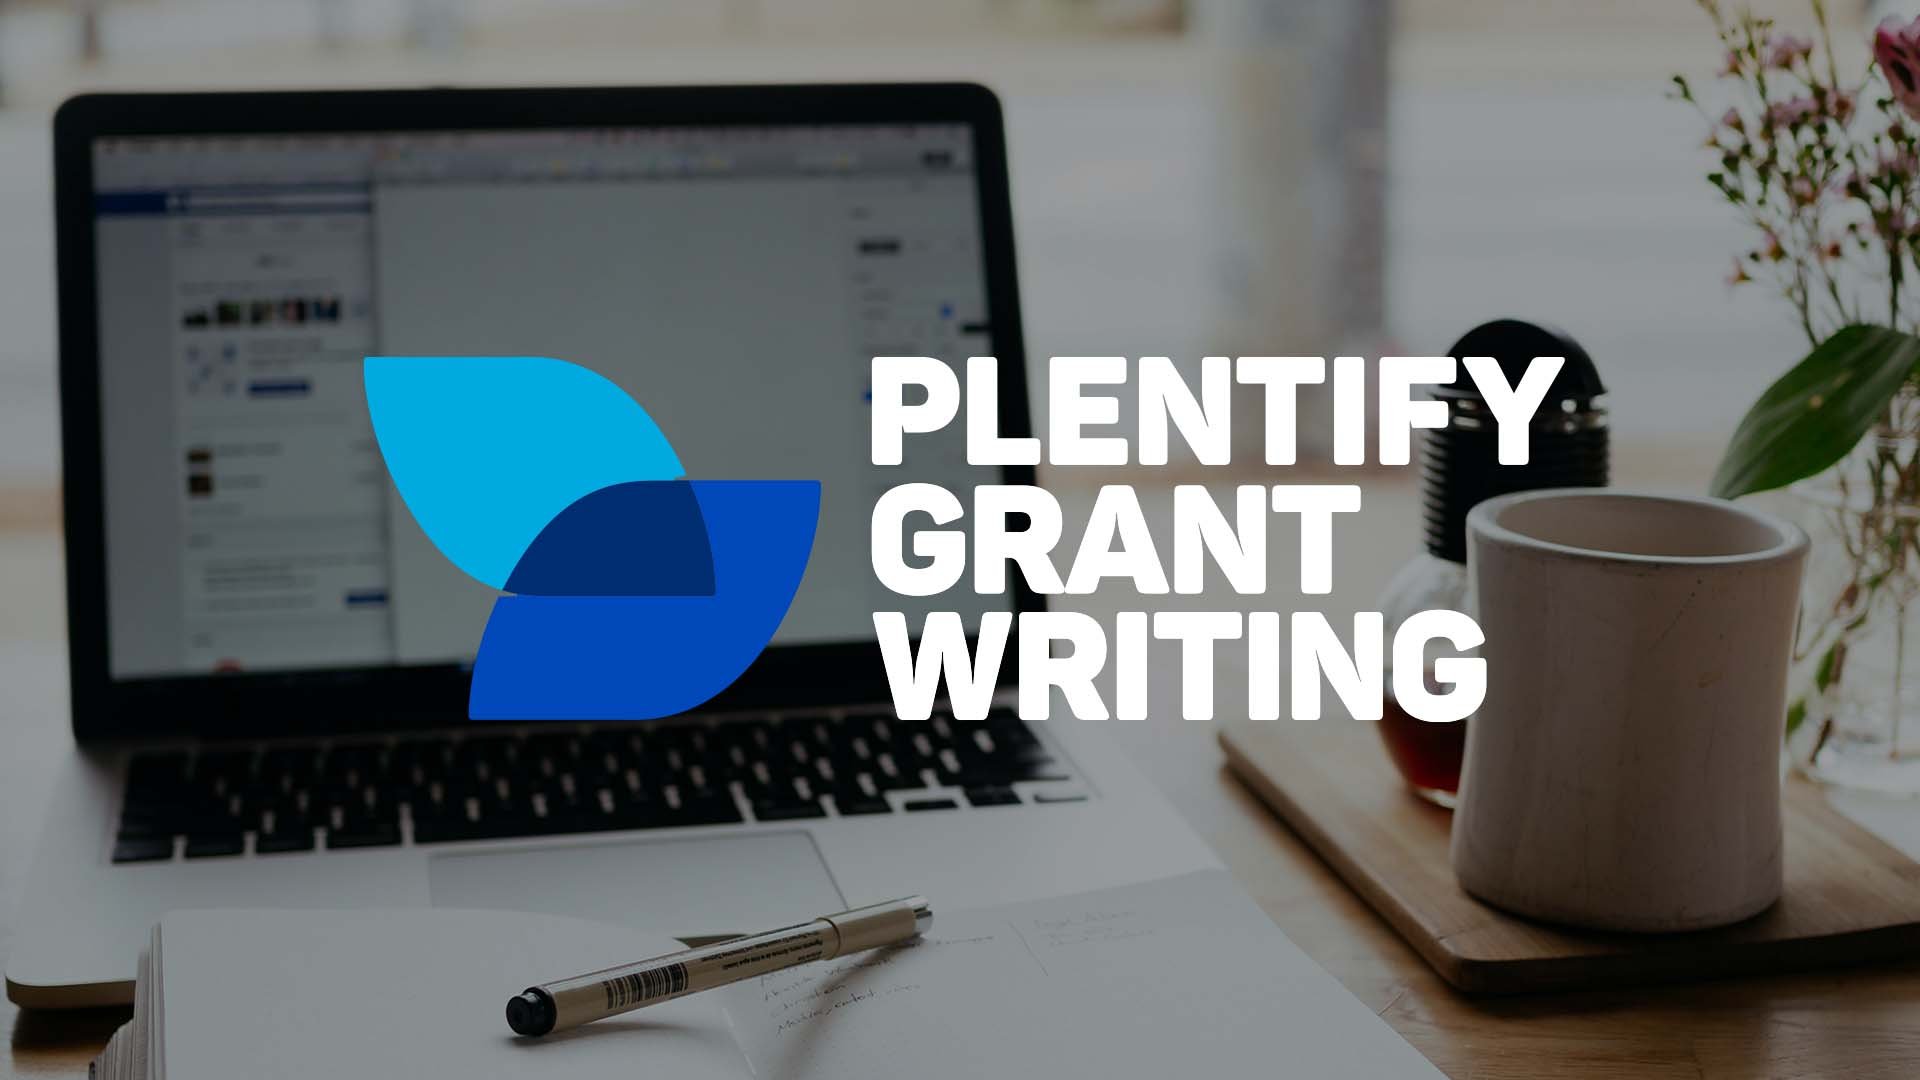 Plentify Grant Writing Blog Image 1920x1080.jpg